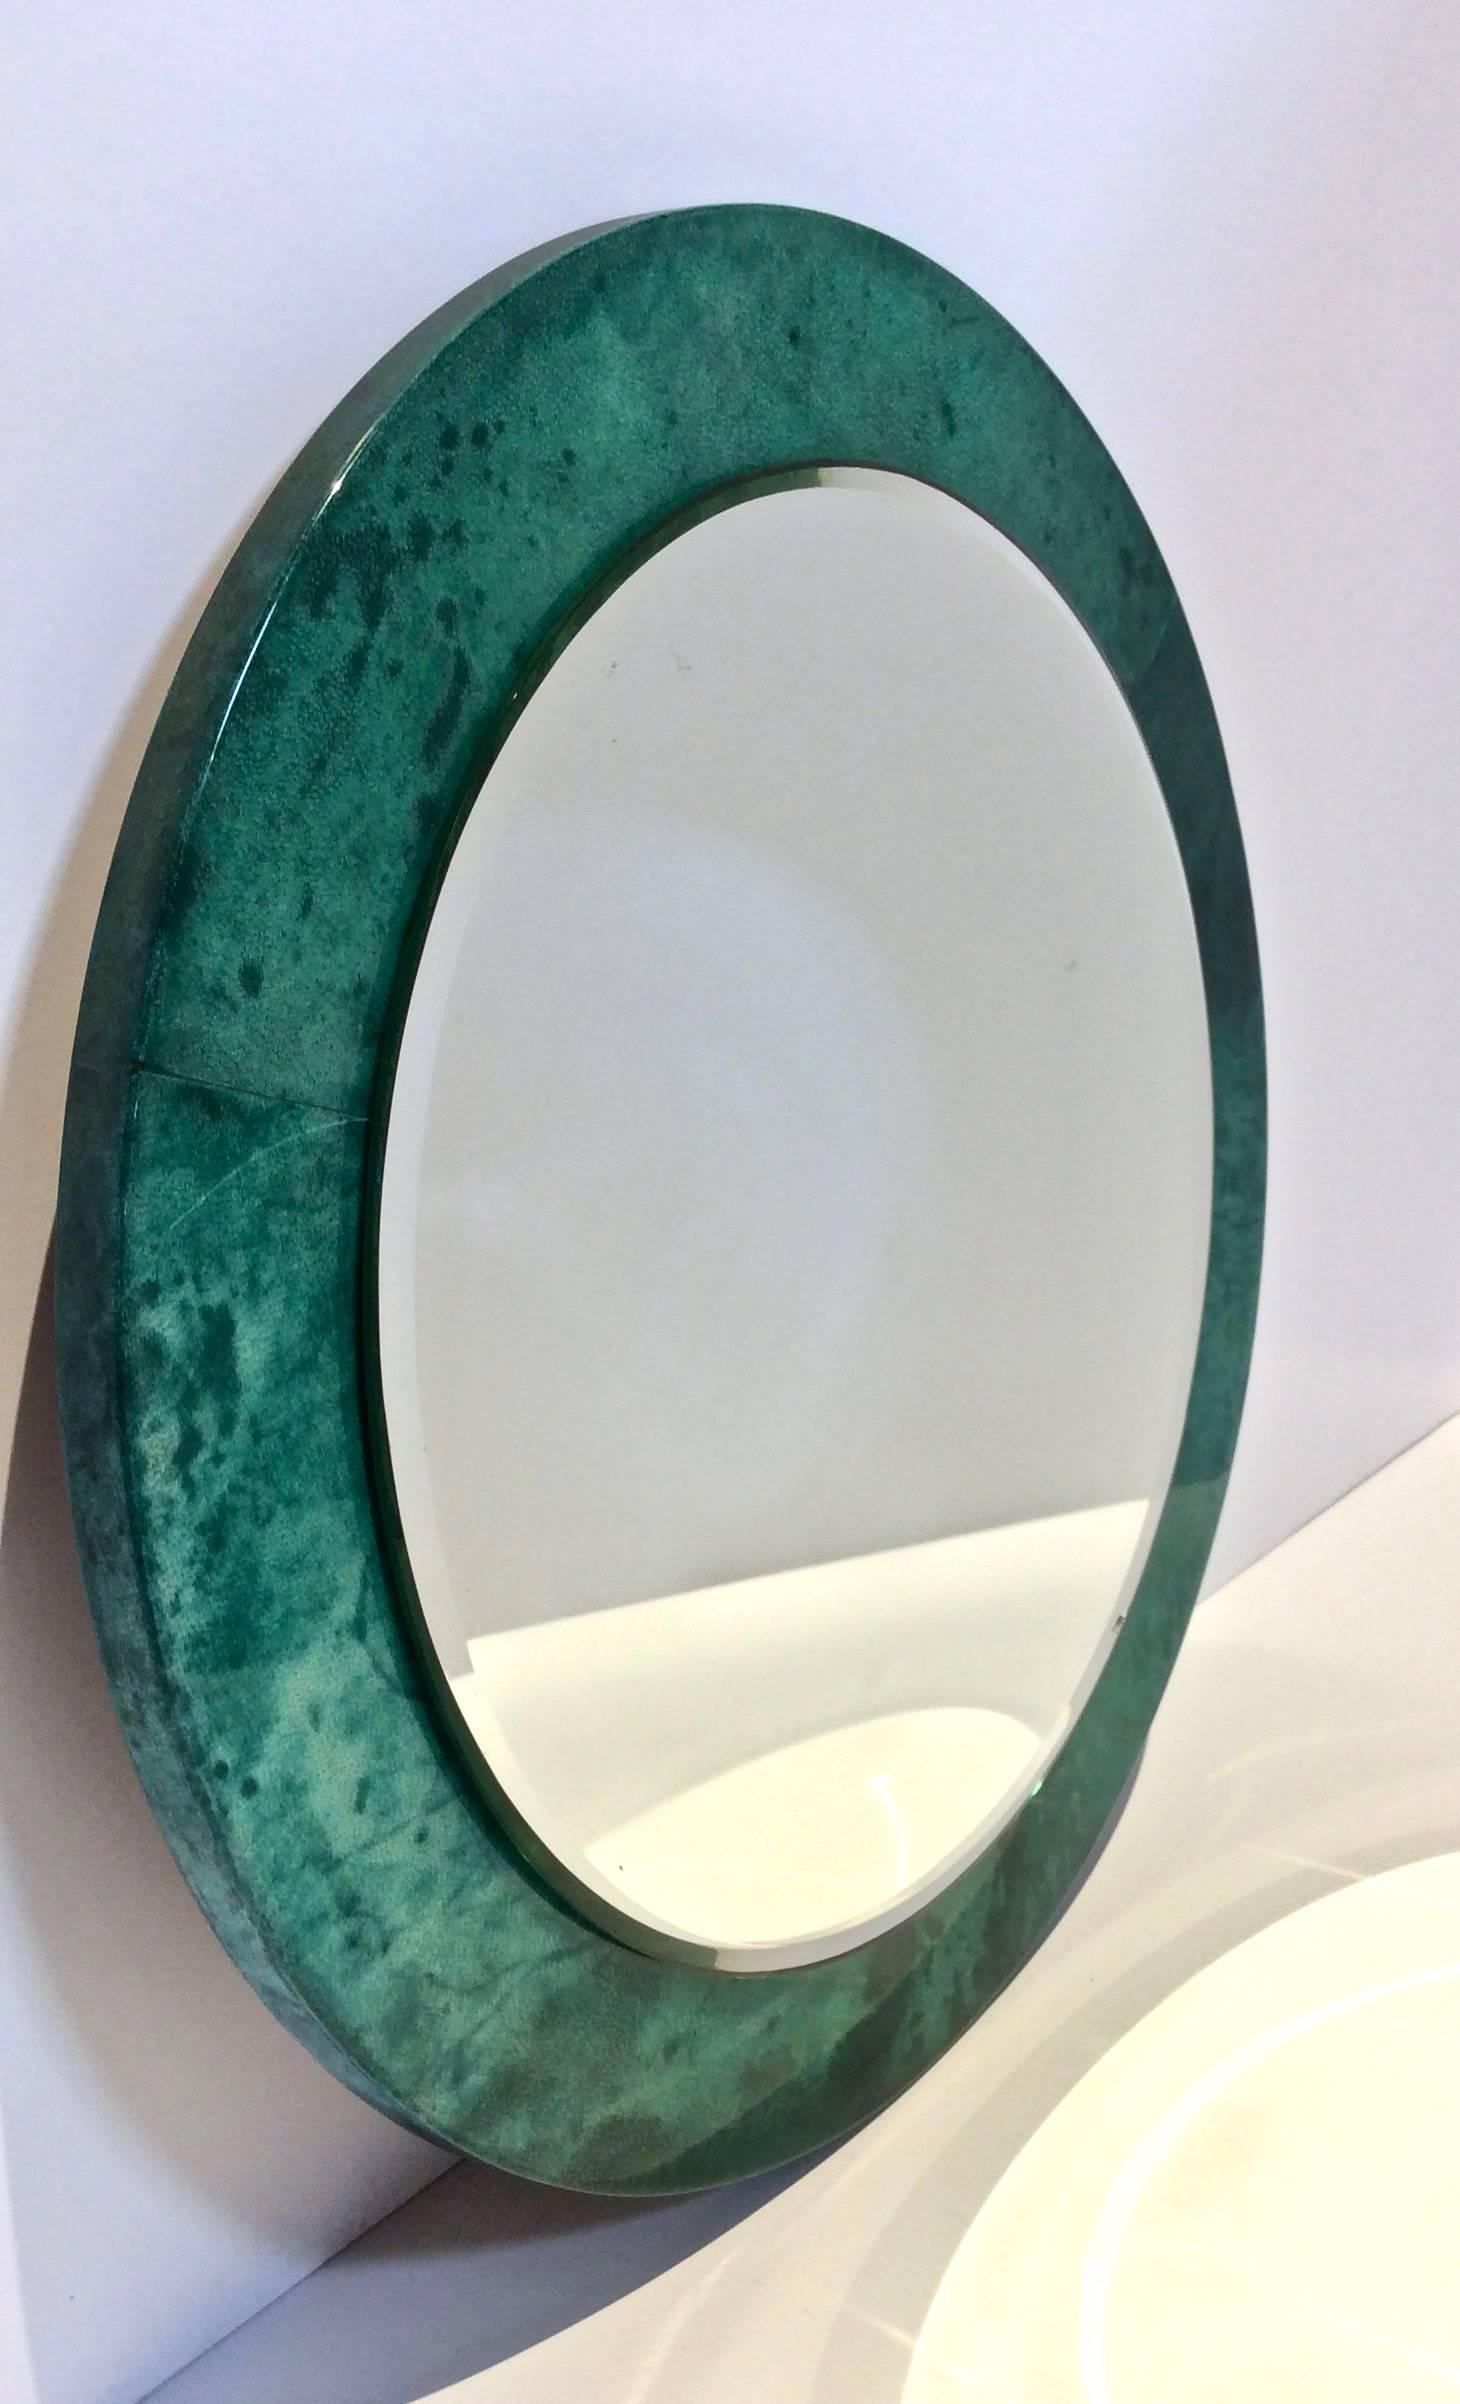 Beautiful mottled green lacquered goatskin mirror (beveled) by Aldo Tura. Original Sticker still intact on back.